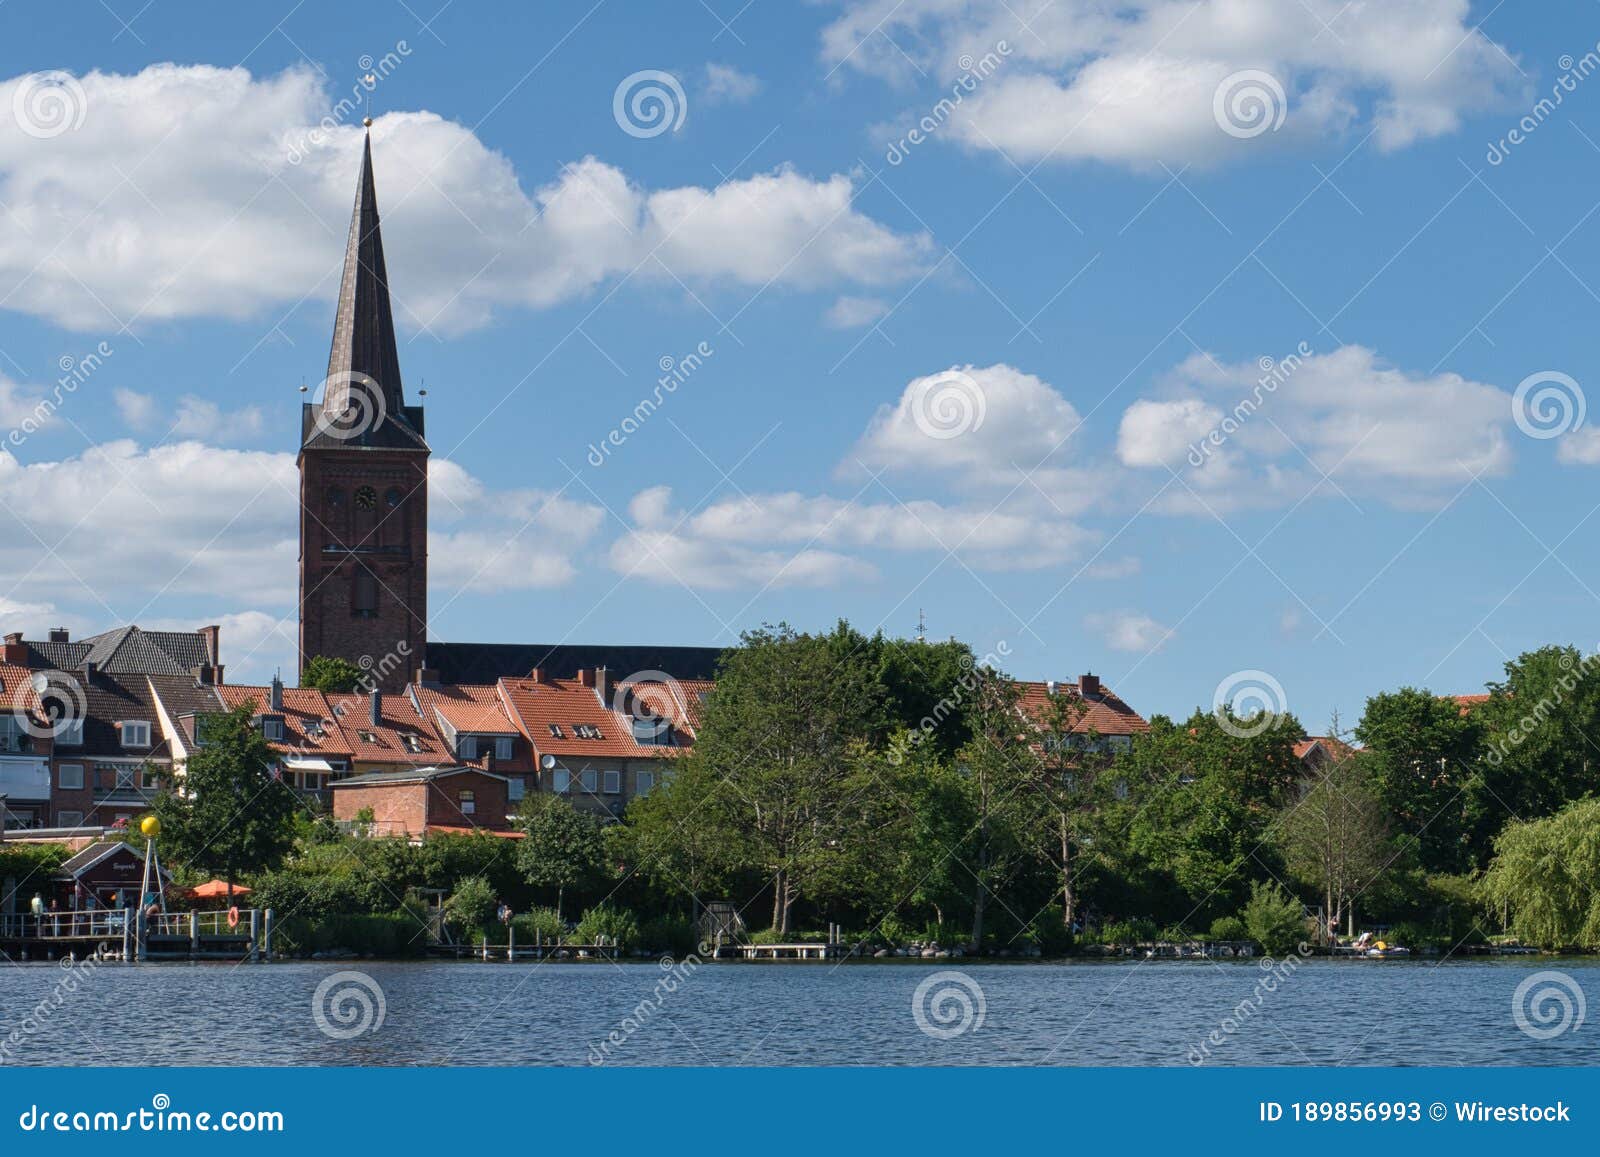 beautiful shot of a nikolaikirche church in ploen, plon town in germany